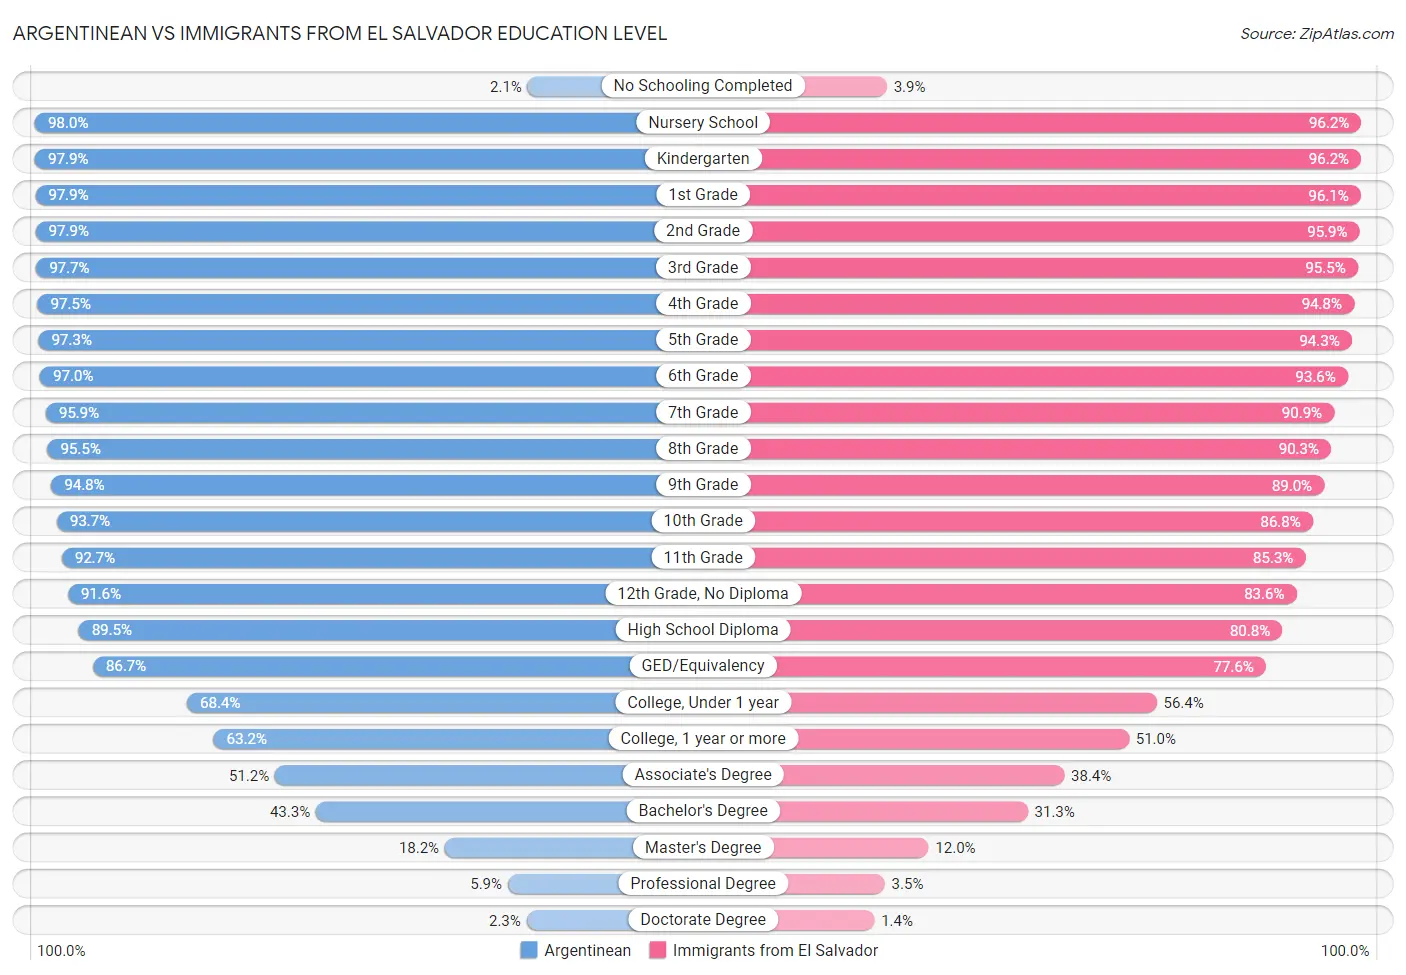 Argentinean vs Immigrants from El Salvador Education Level